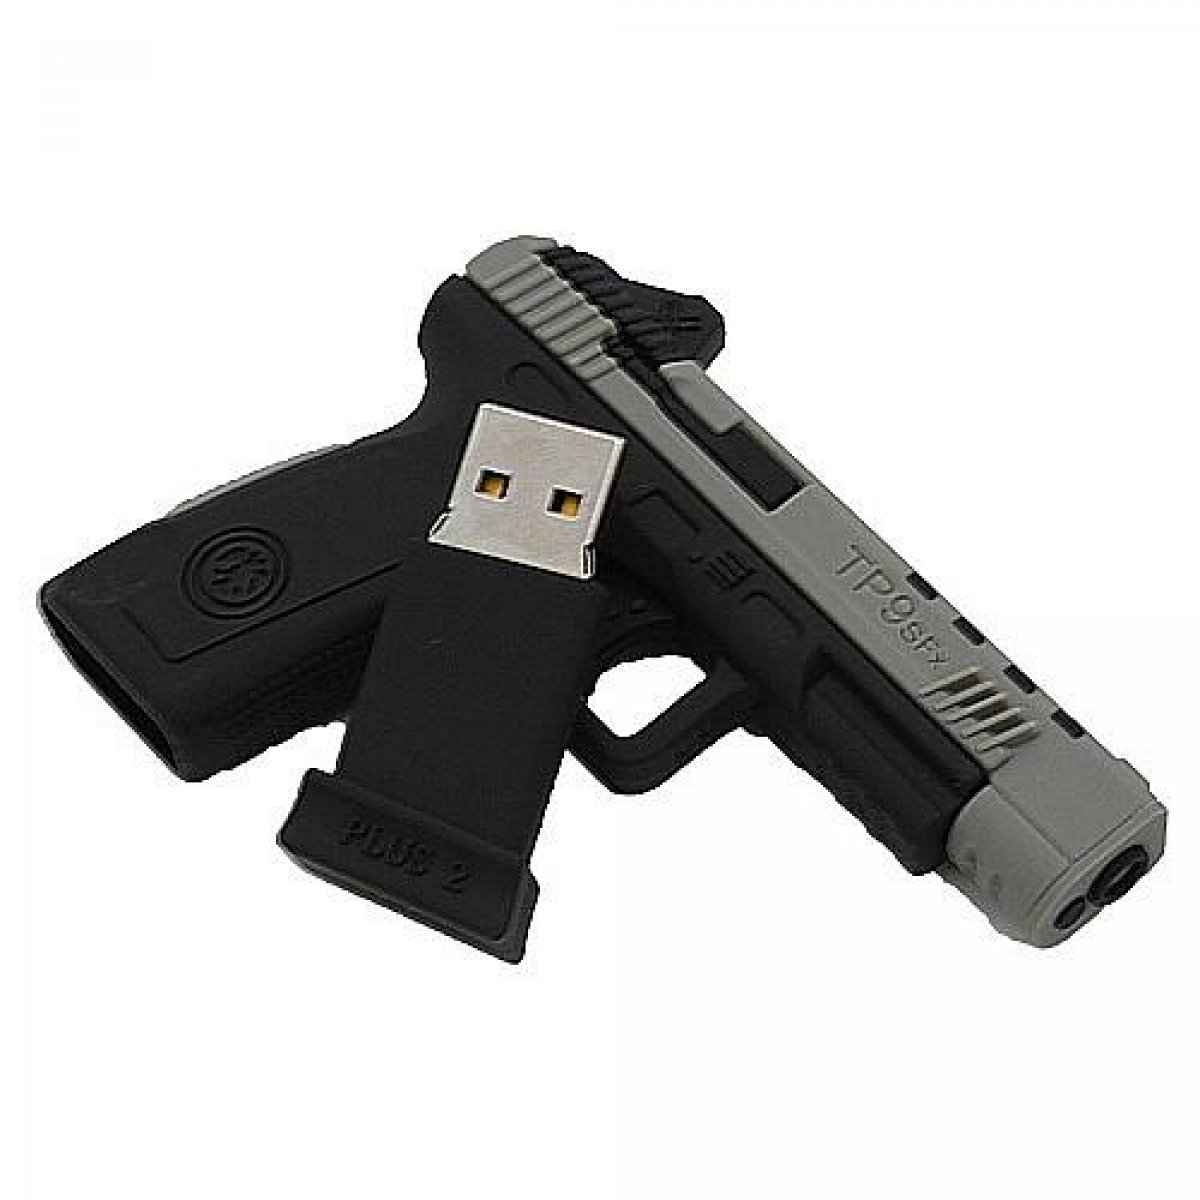 Canik TP9 SFx USB Bellek